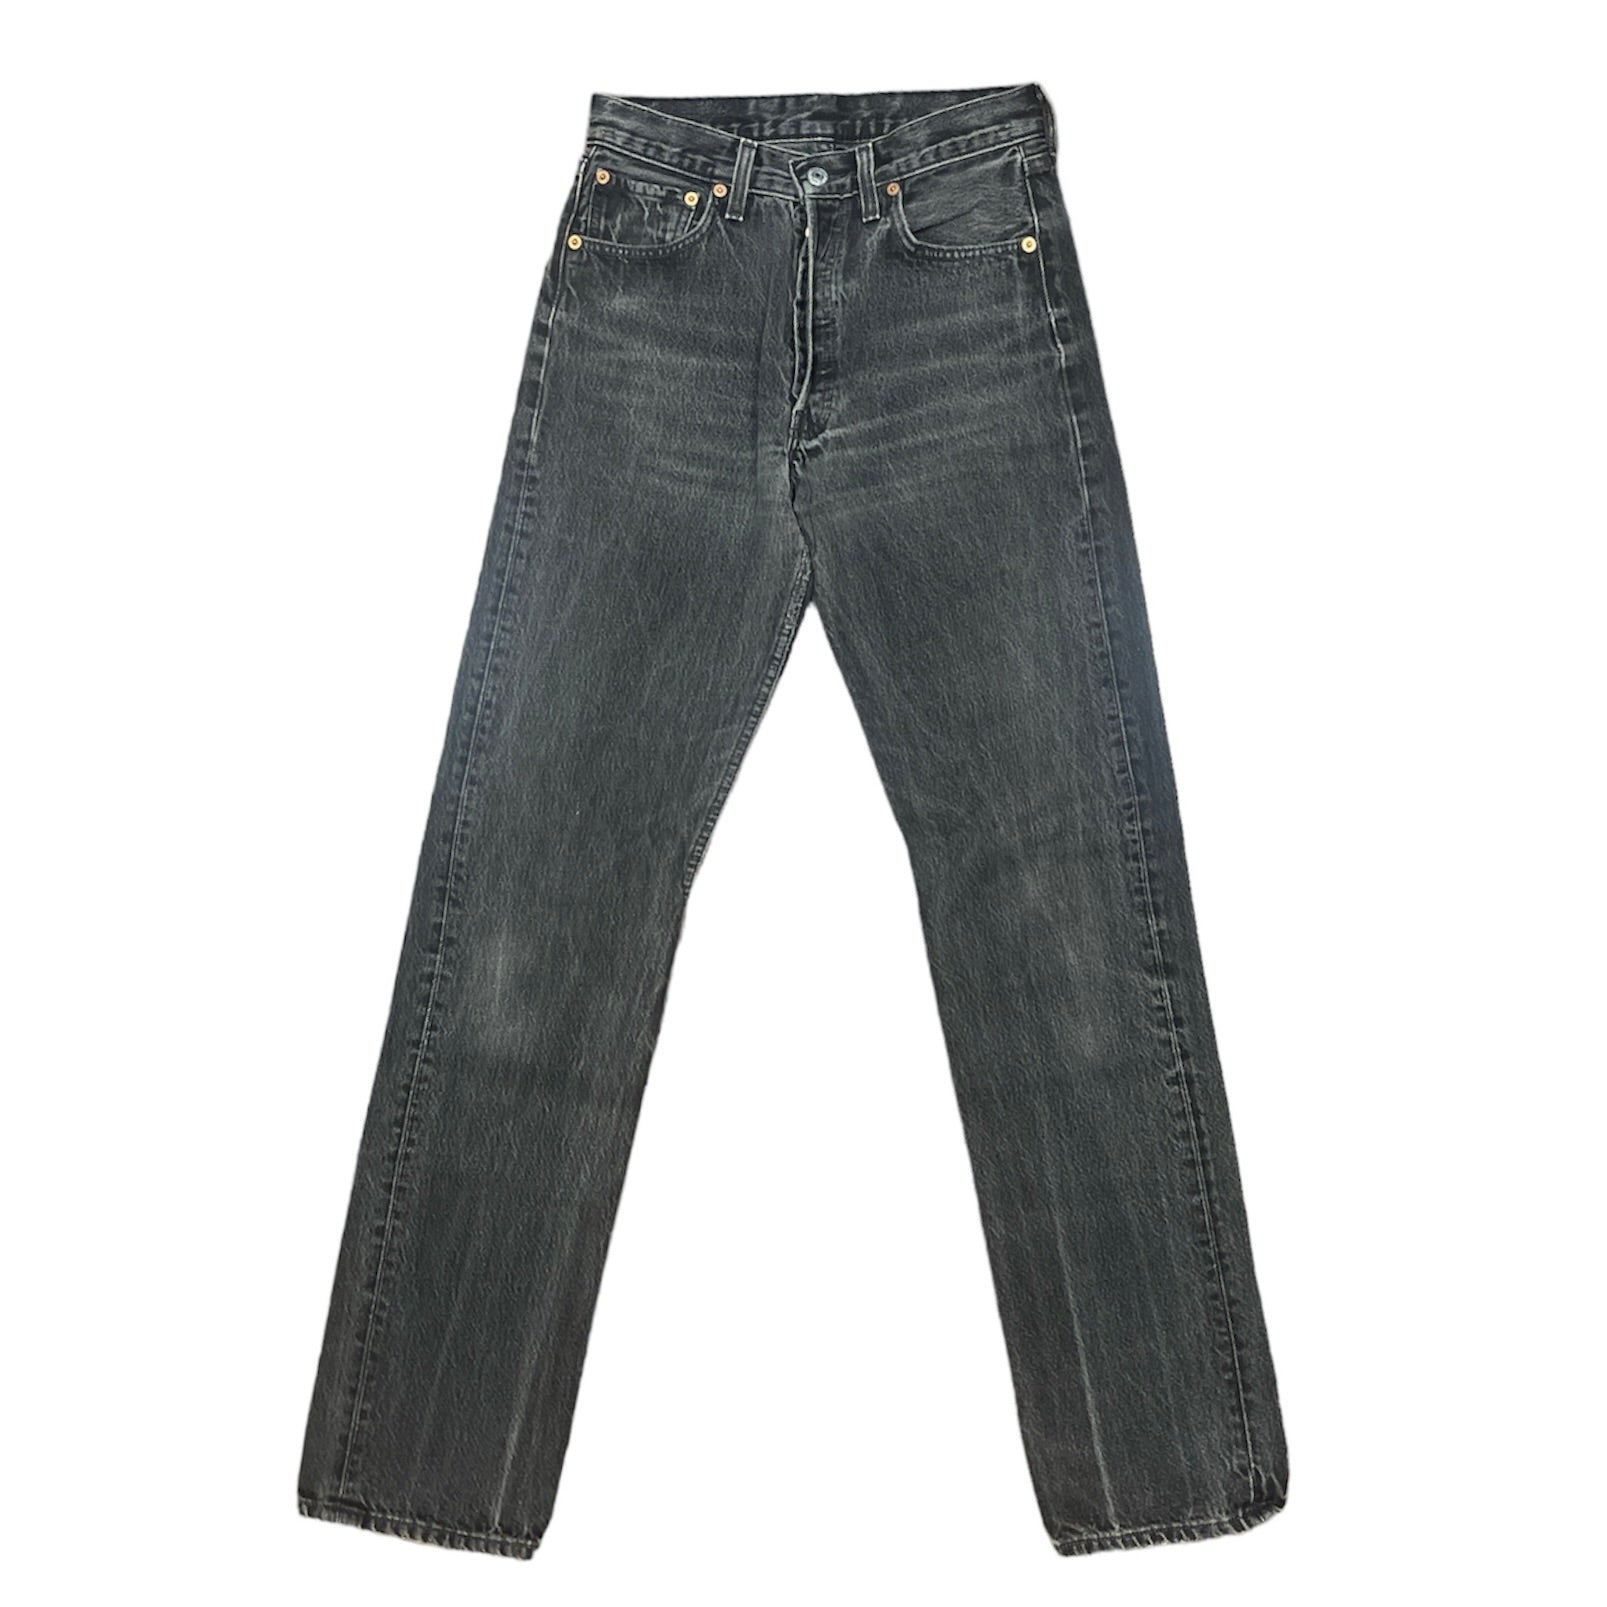 Vintage Levis 501 Dark Grey Jeans (W29/L34)